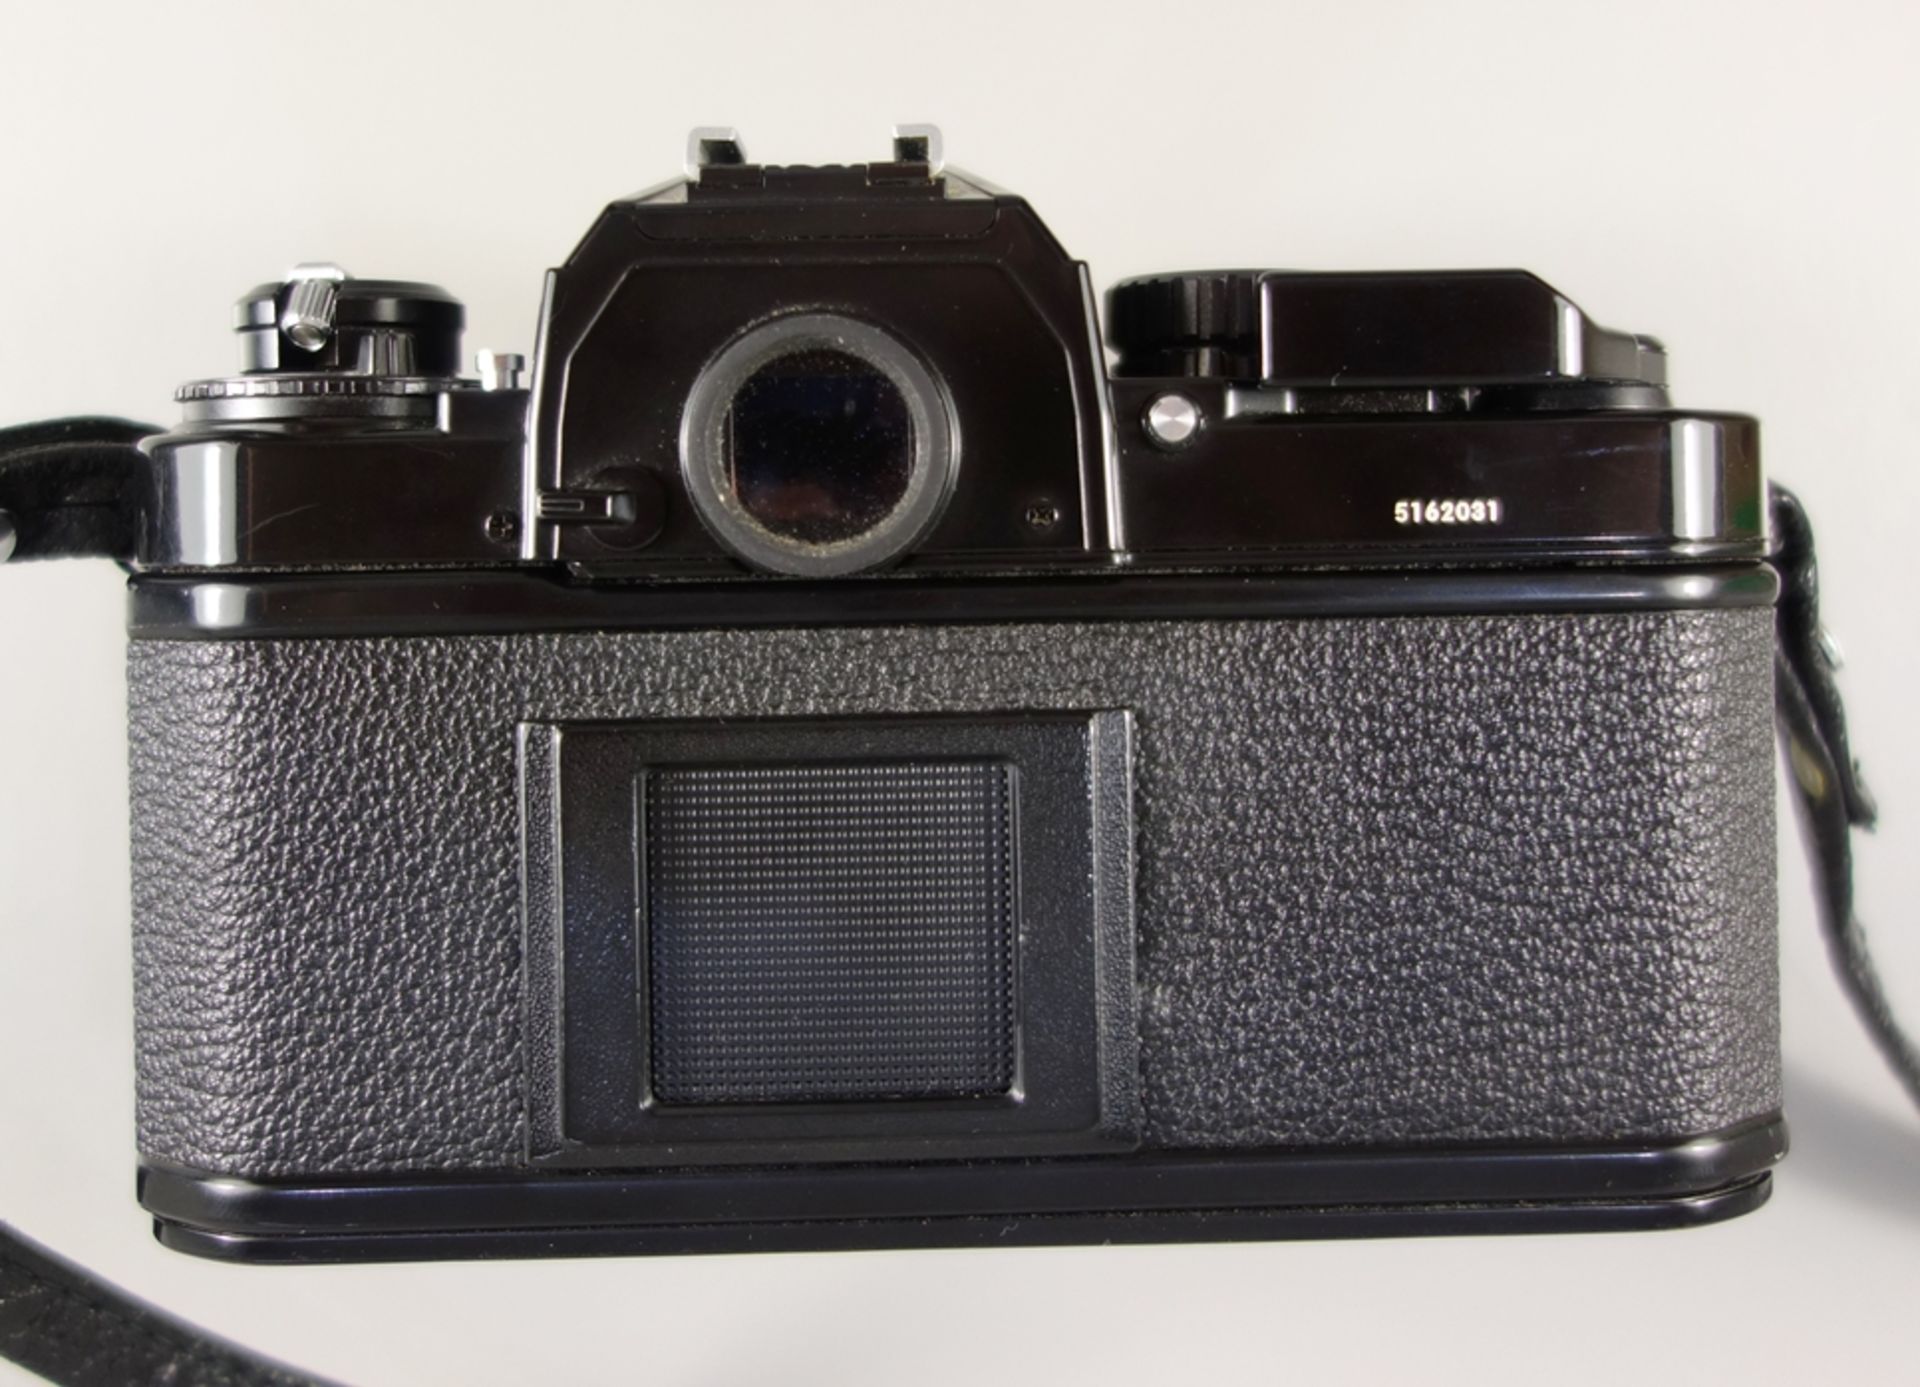 Nikon FA, Spiegelreflexkamera, schwarz, Serien-Nr. 5162031, mit Objektiv Nikon - Bild 3 aus 4